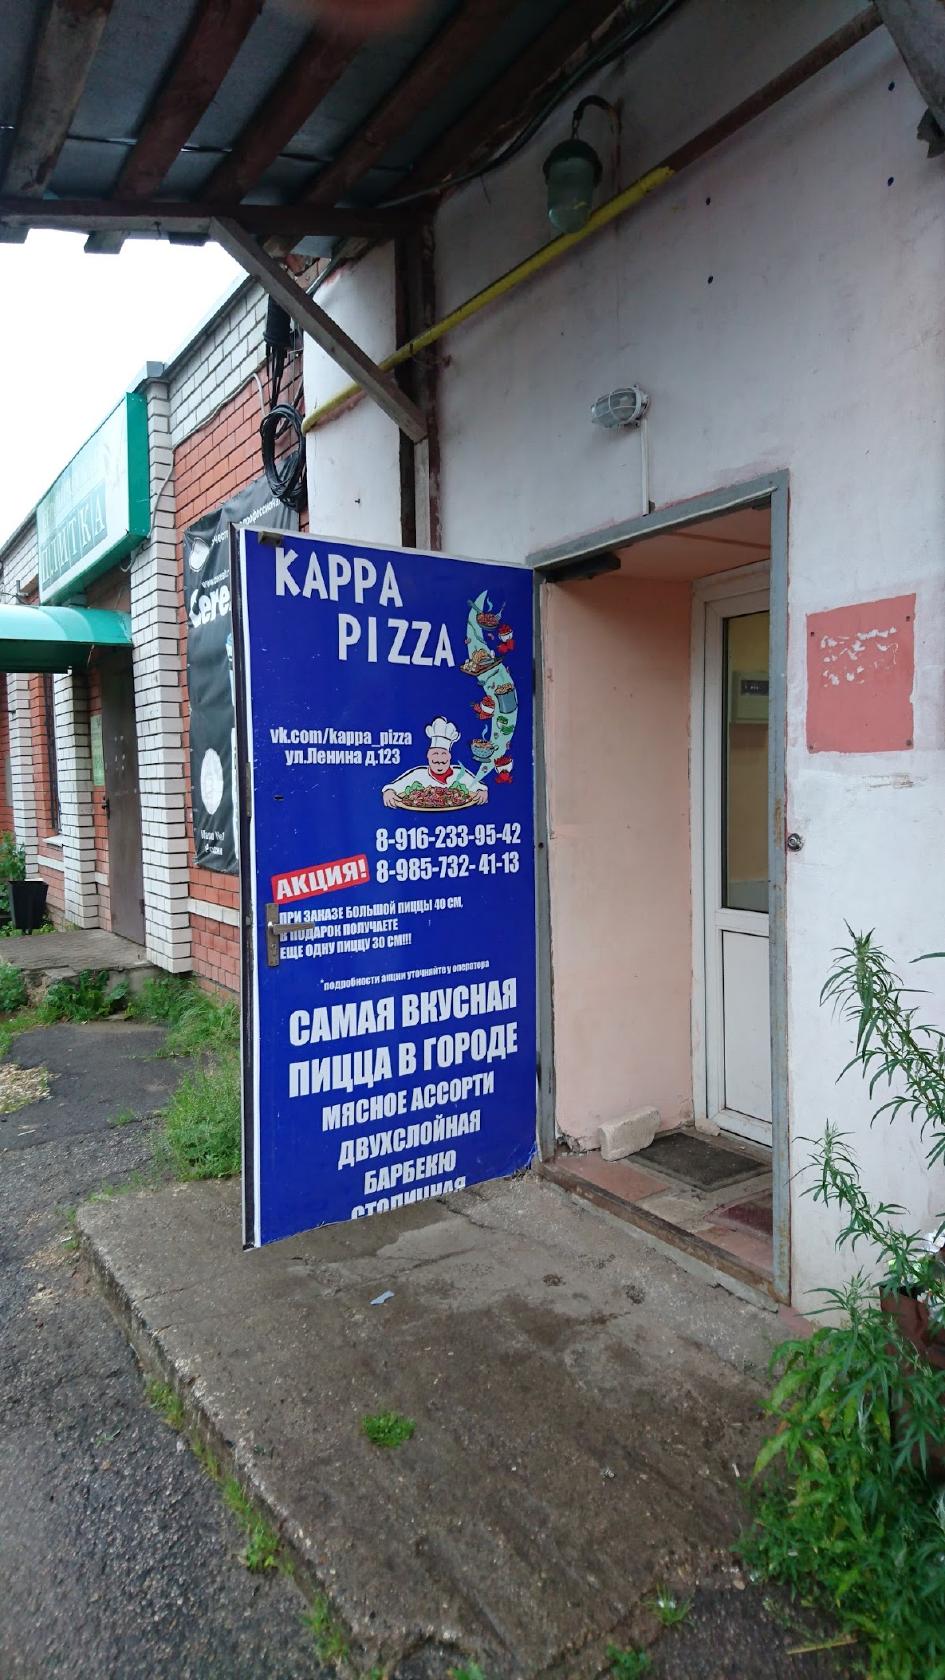 Kappa pizza